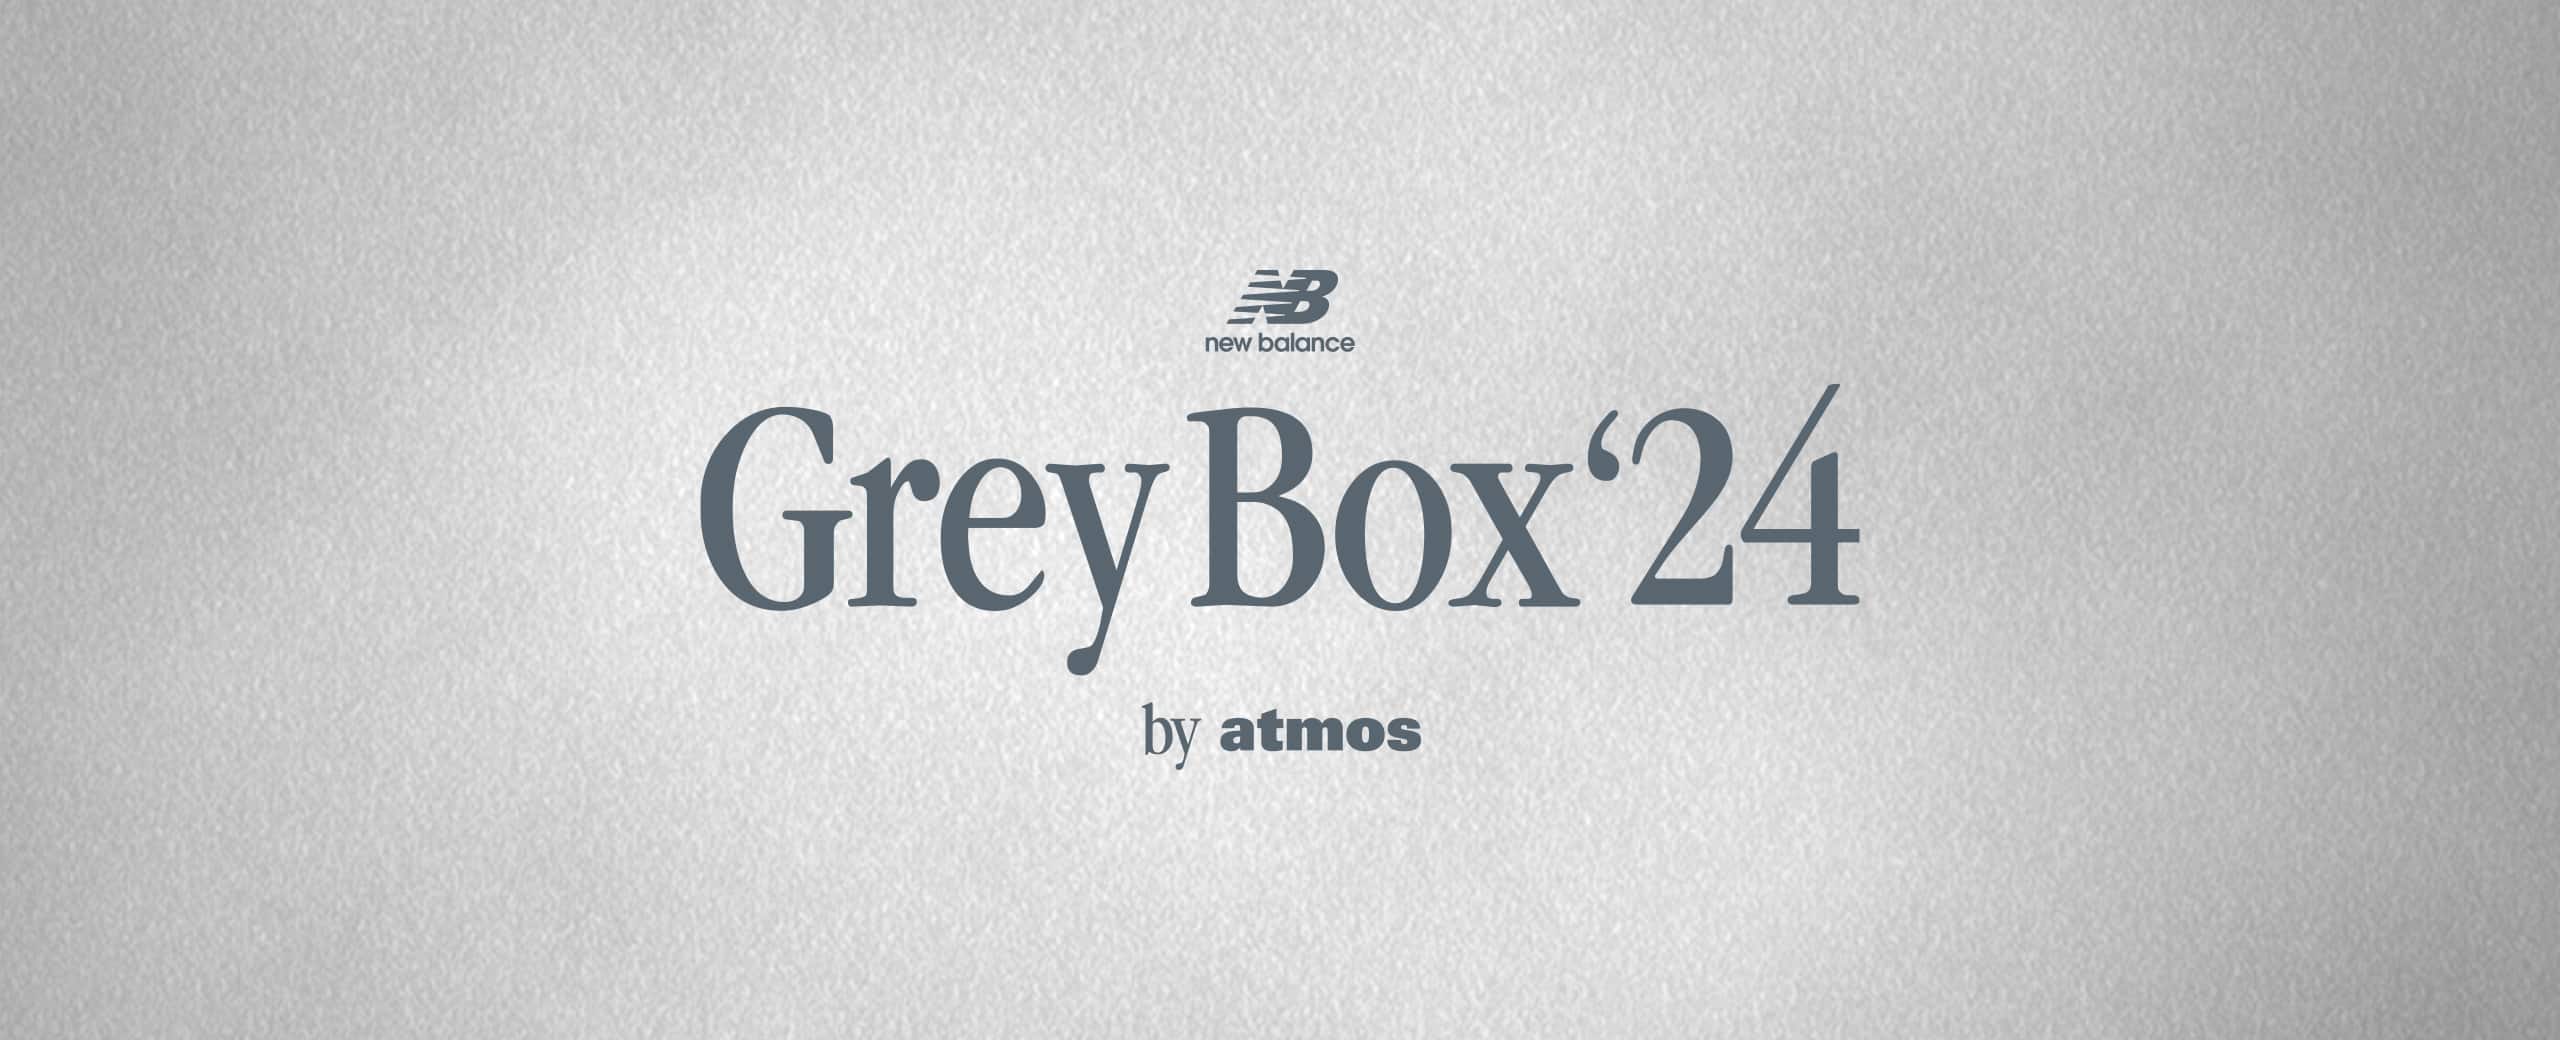 "New Balance "Grey Box'24""